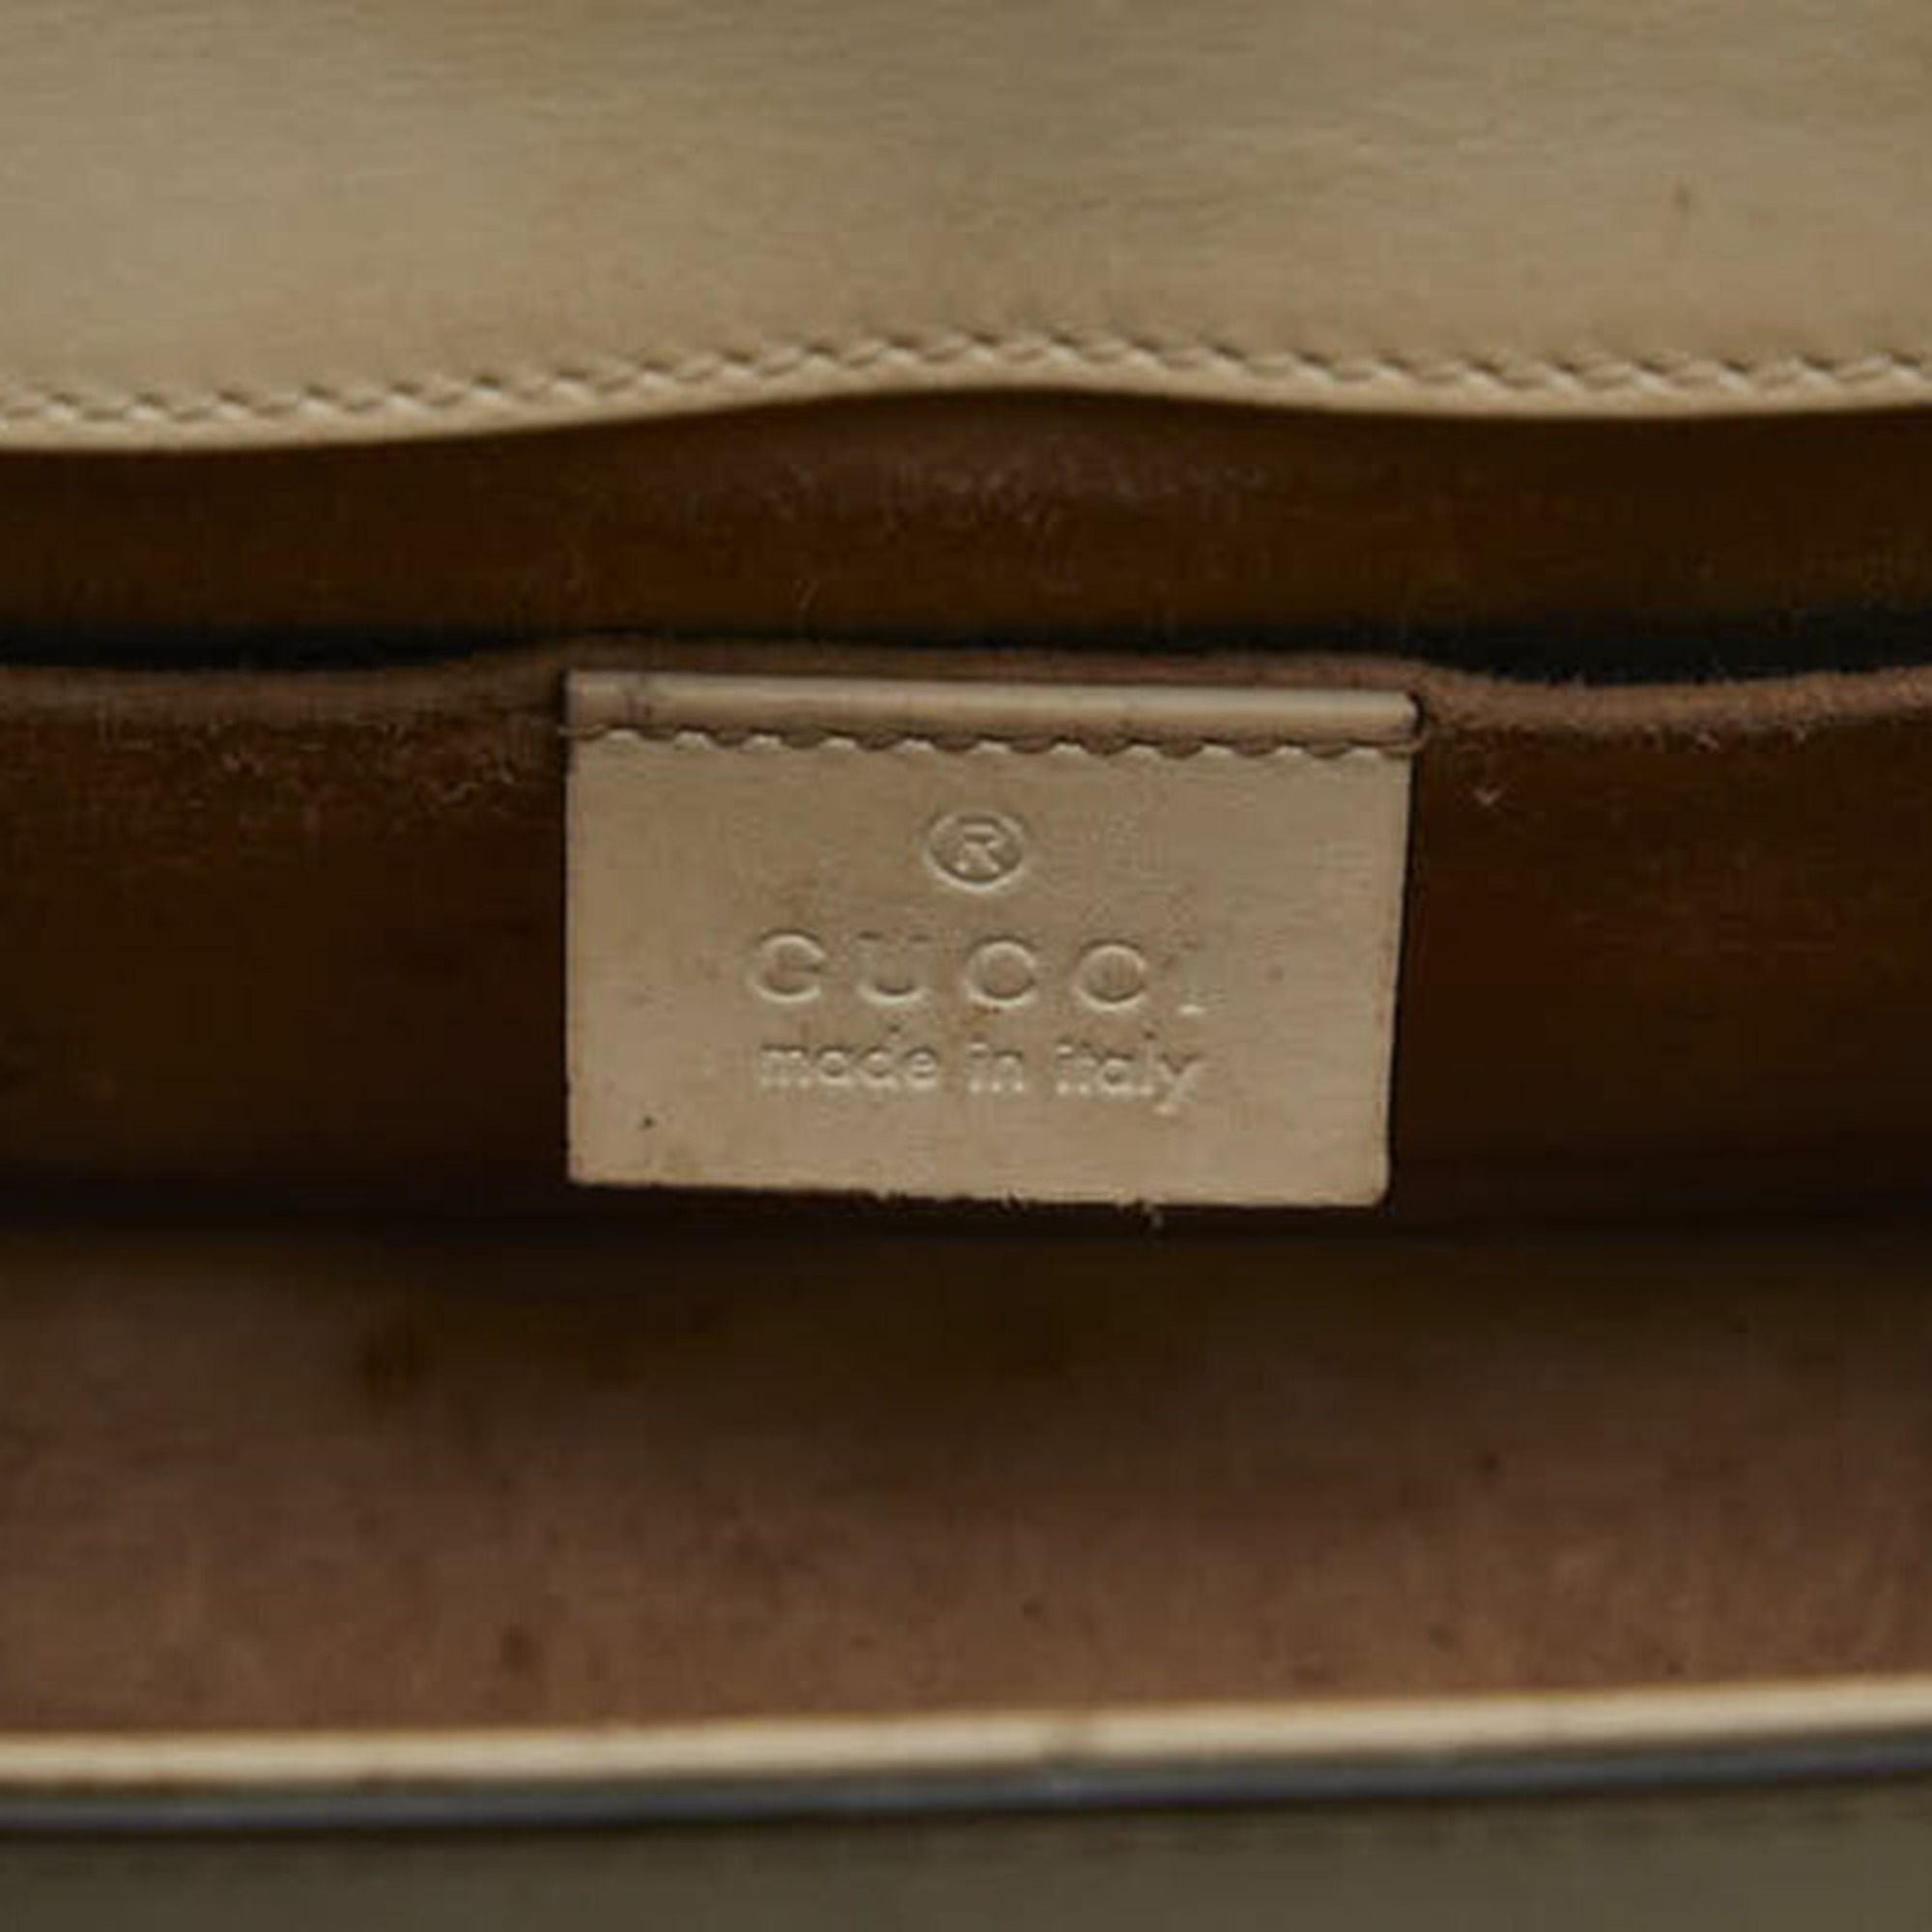 Gucci Sylvie Handbag Shoulder Bag 470270 White Leather Women's GUCCI